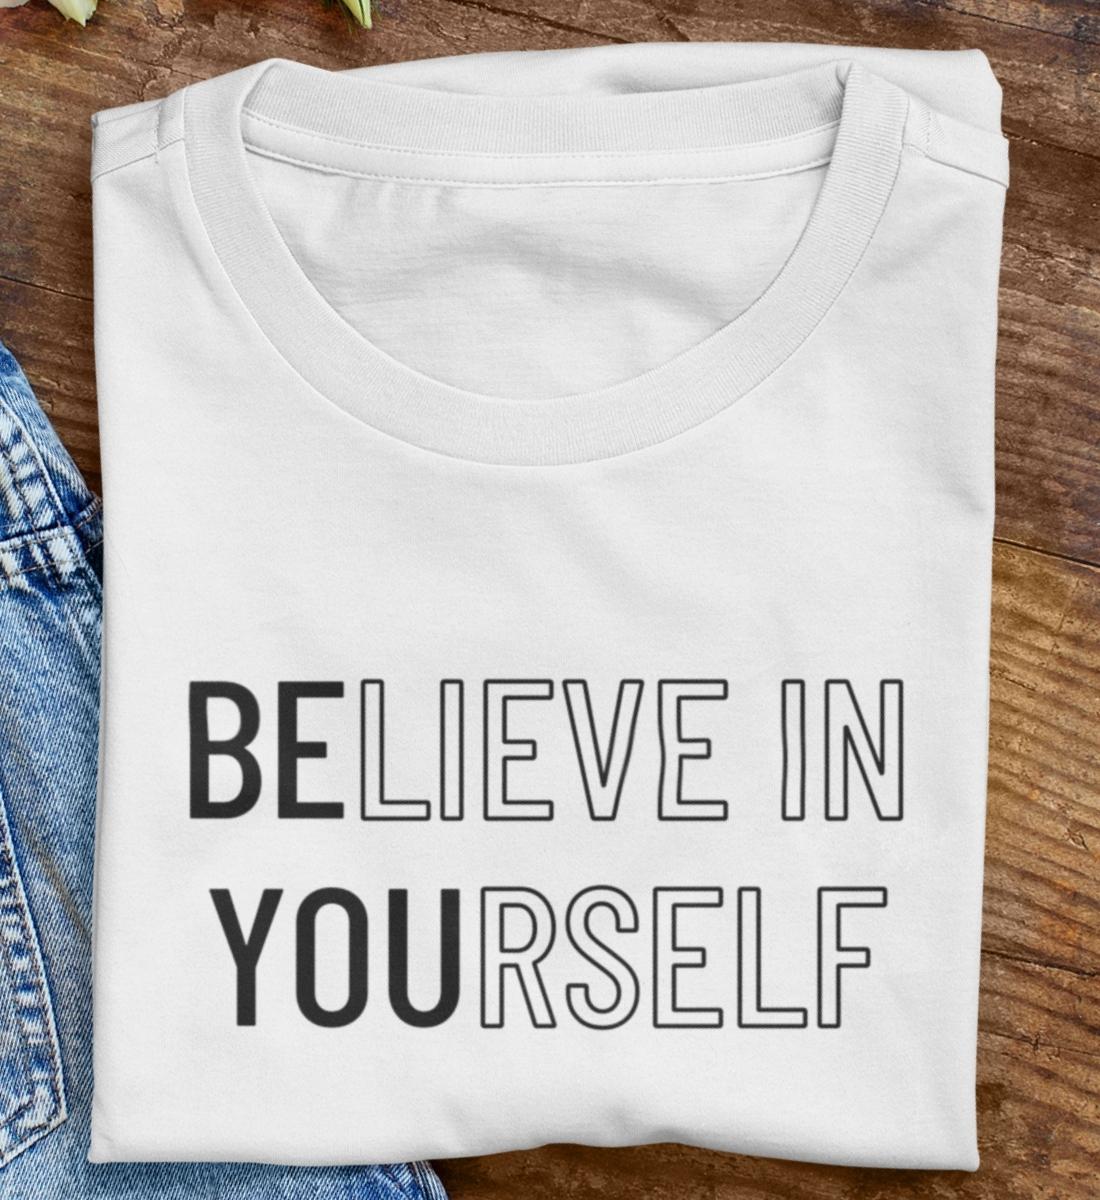 Believe 100% Bio T-Shirt